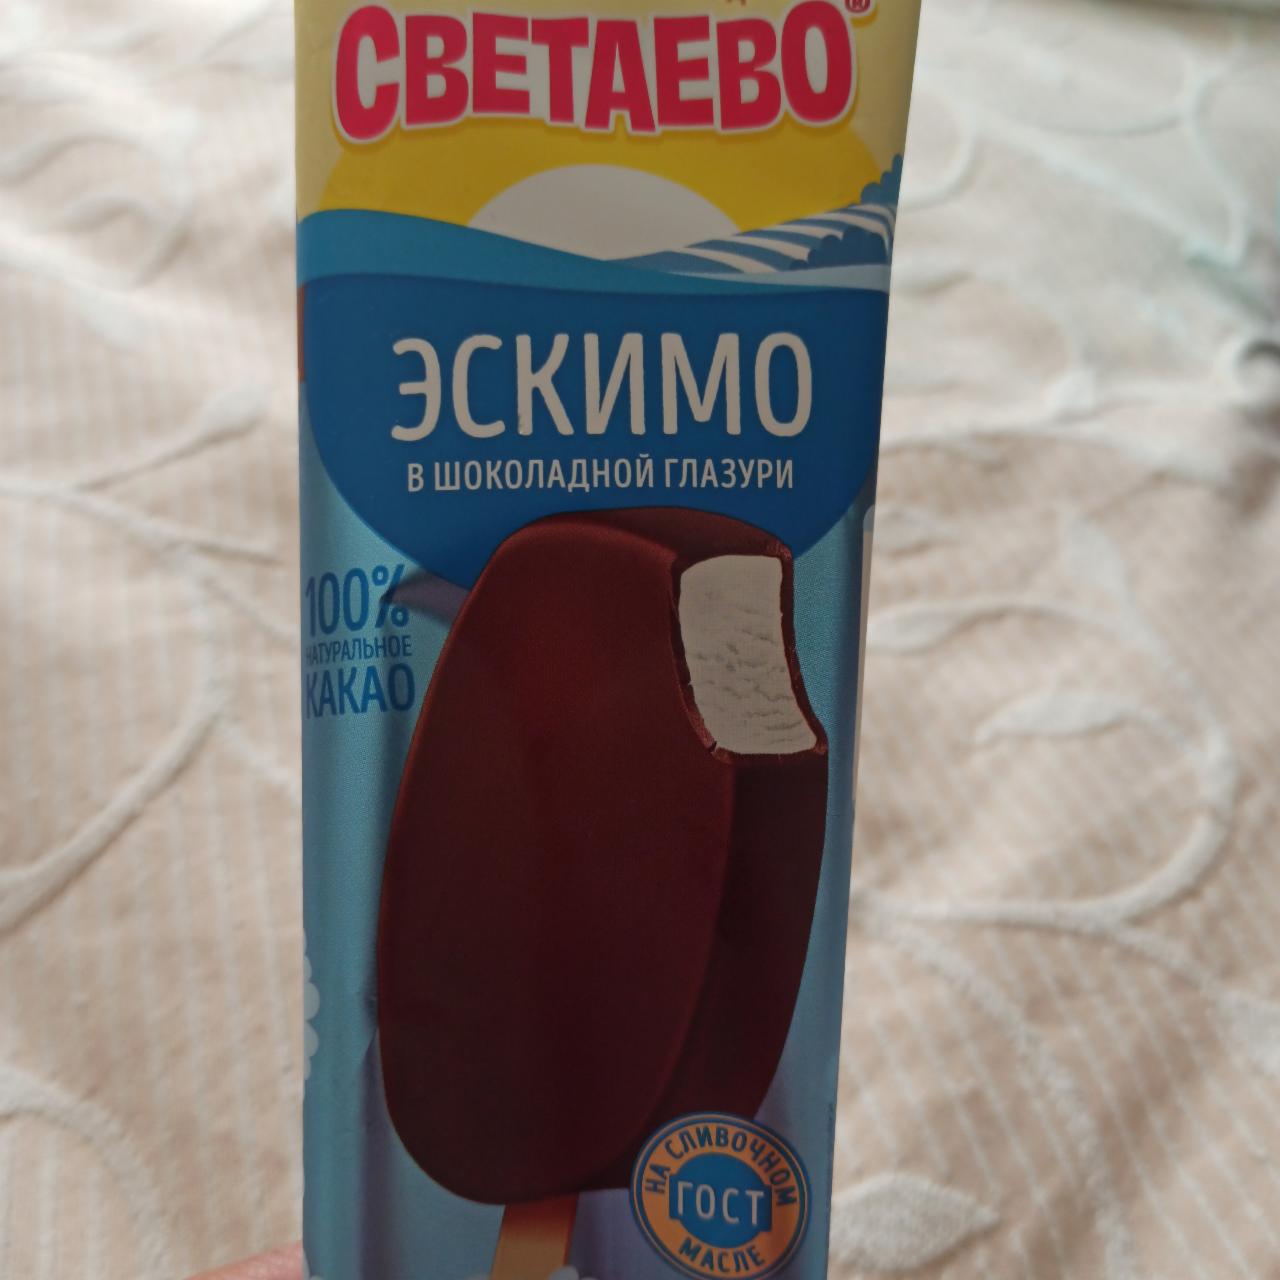 Фото - Мороженое эскимо в молочном шоколаде Светаево